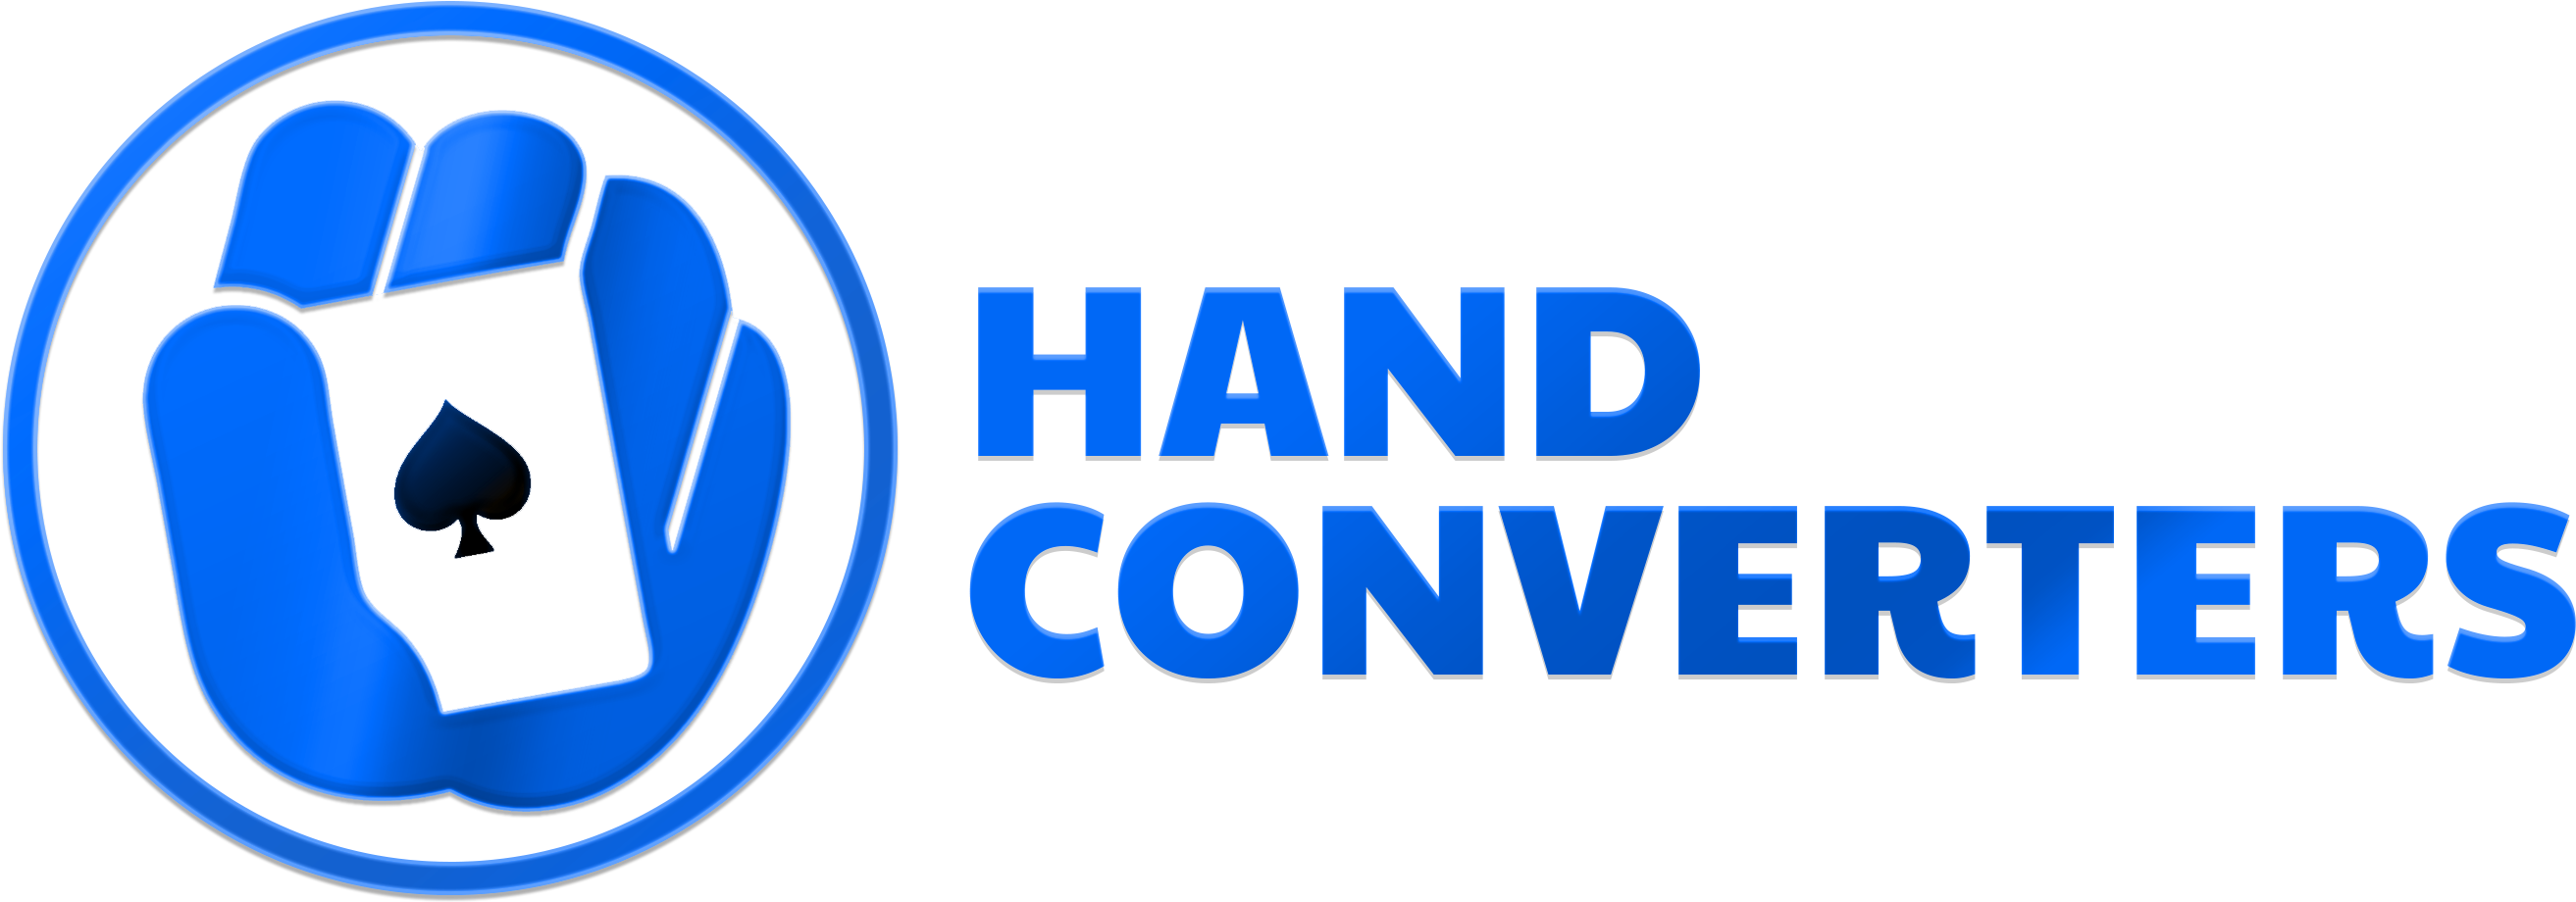 Poker Hand Converters - Orbit Housing Association Clipart (2700x1100), Png Download